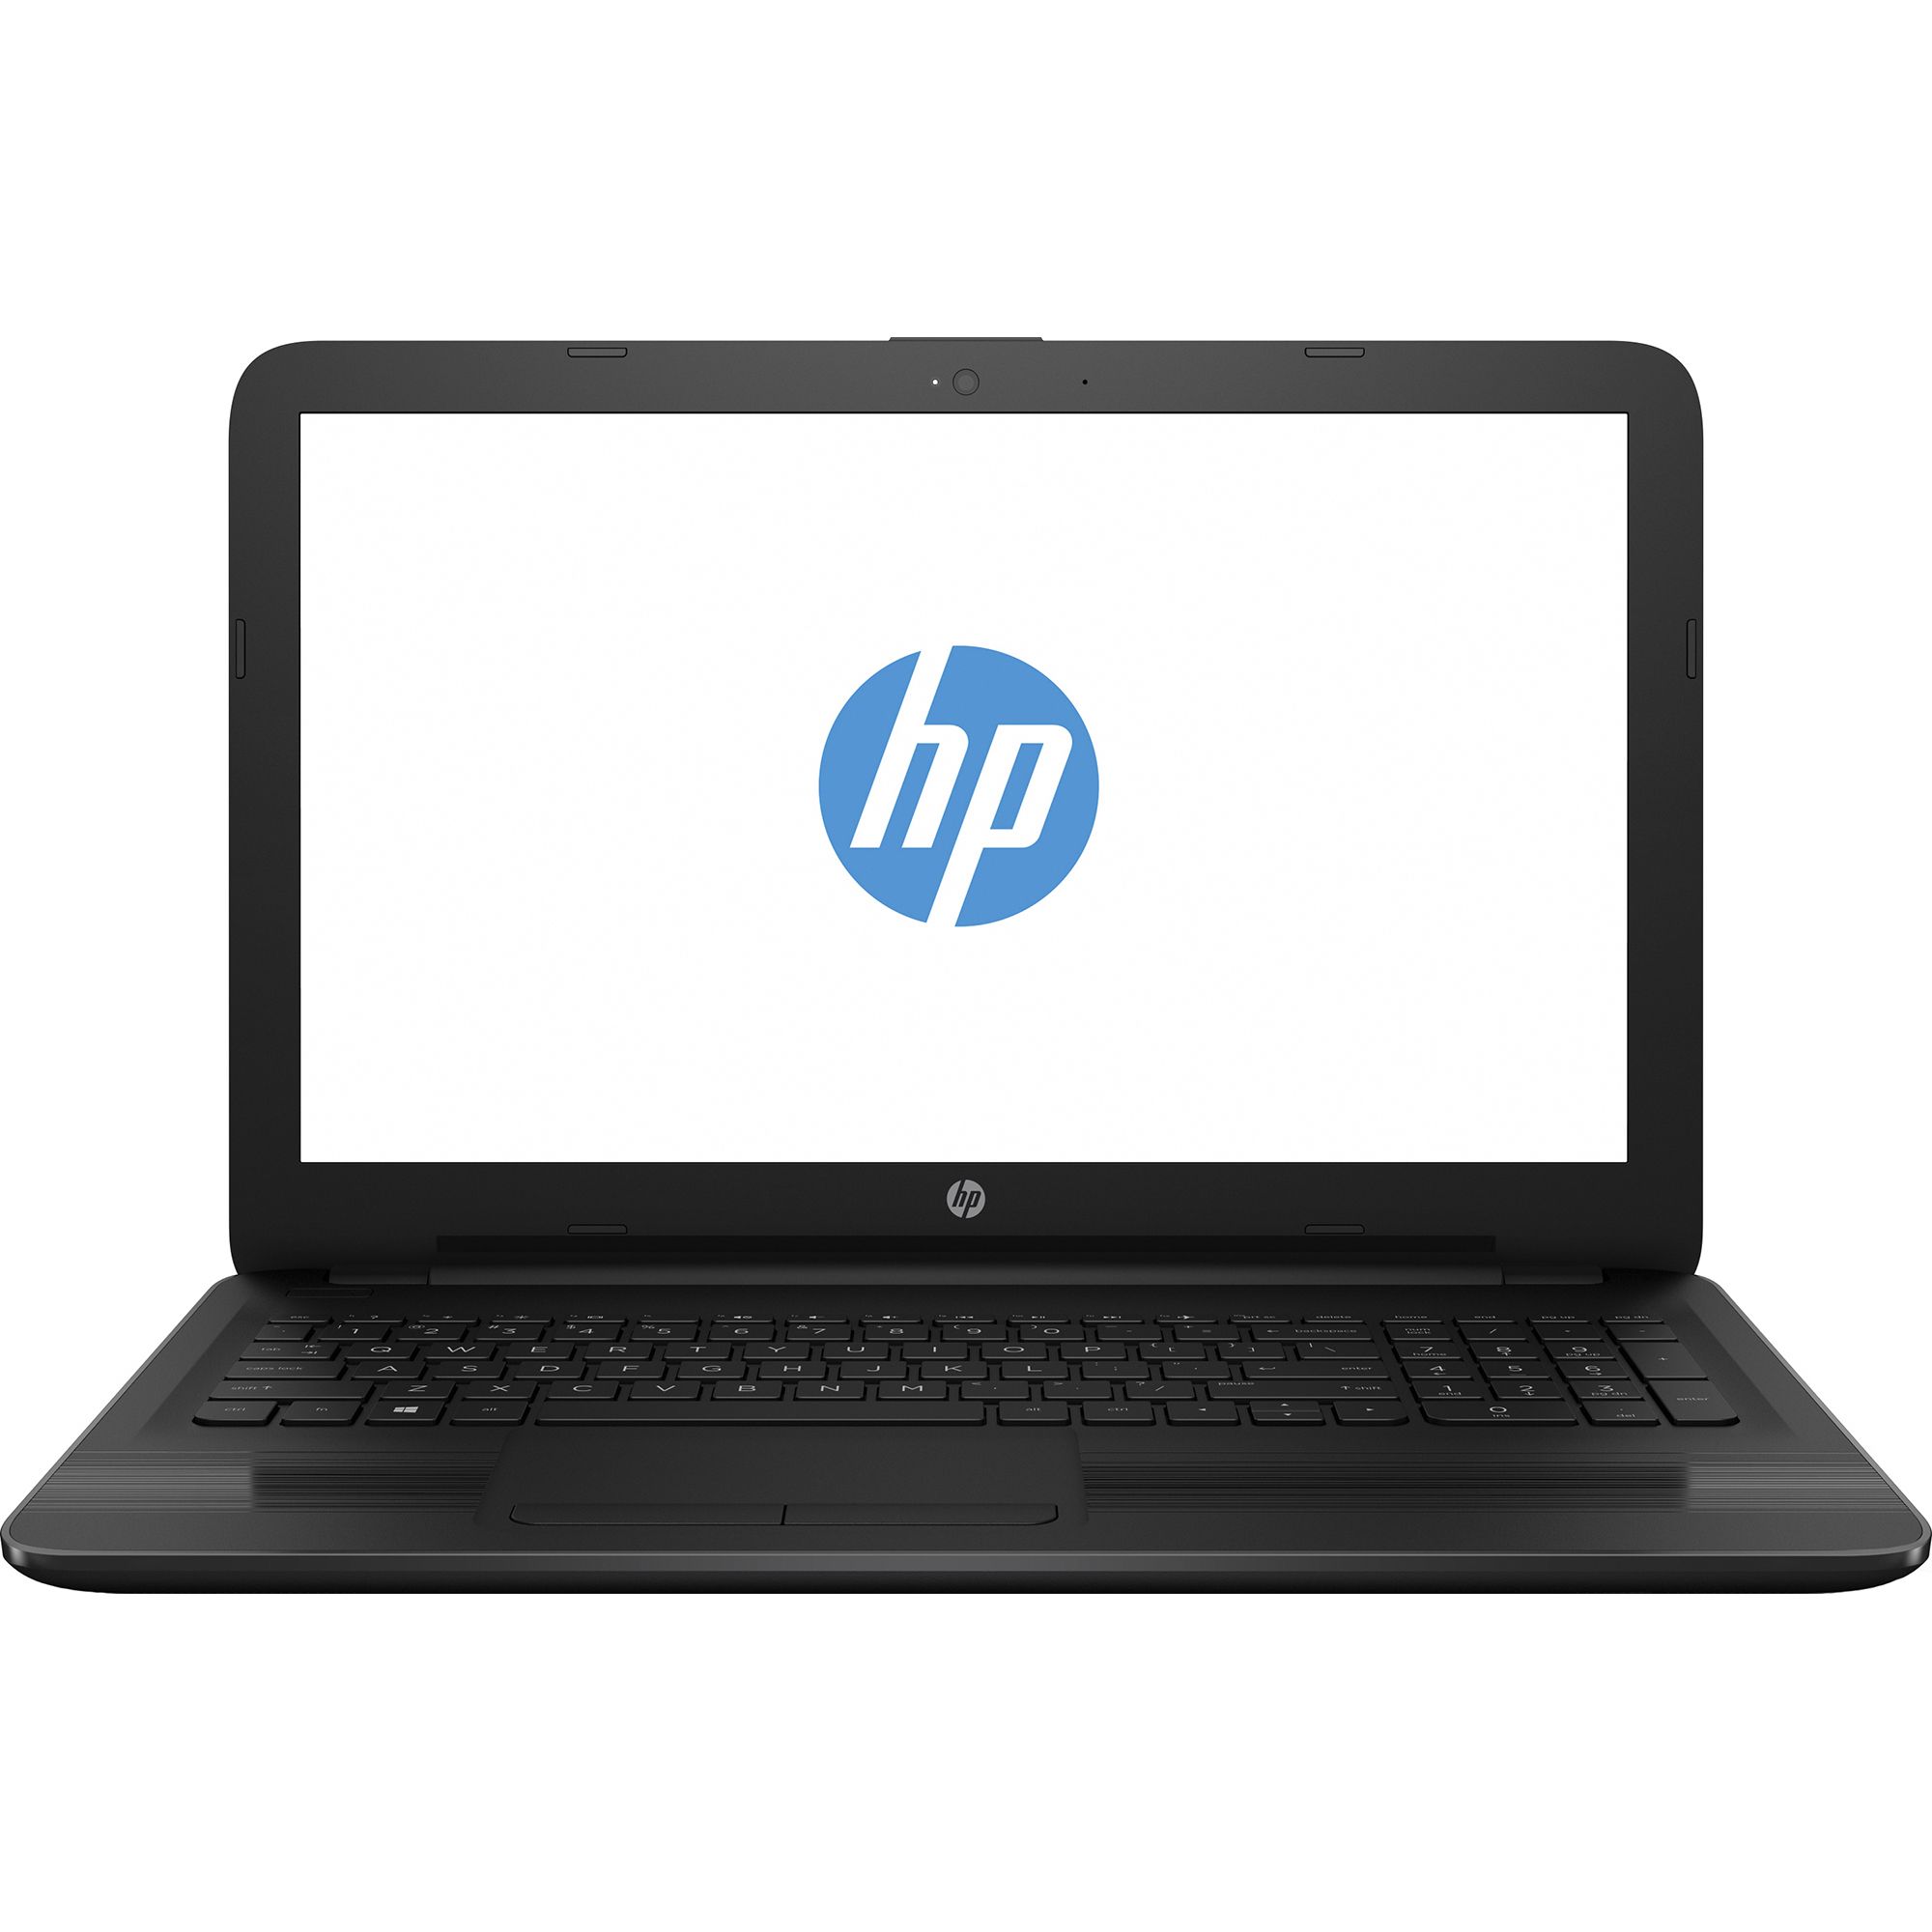  Laptop HP Y0B14EA, Intel Core i7-6500U, 8GB DDR4, HDD 1TB, AMD Radeon R7 M440 2GB, Free DOS 